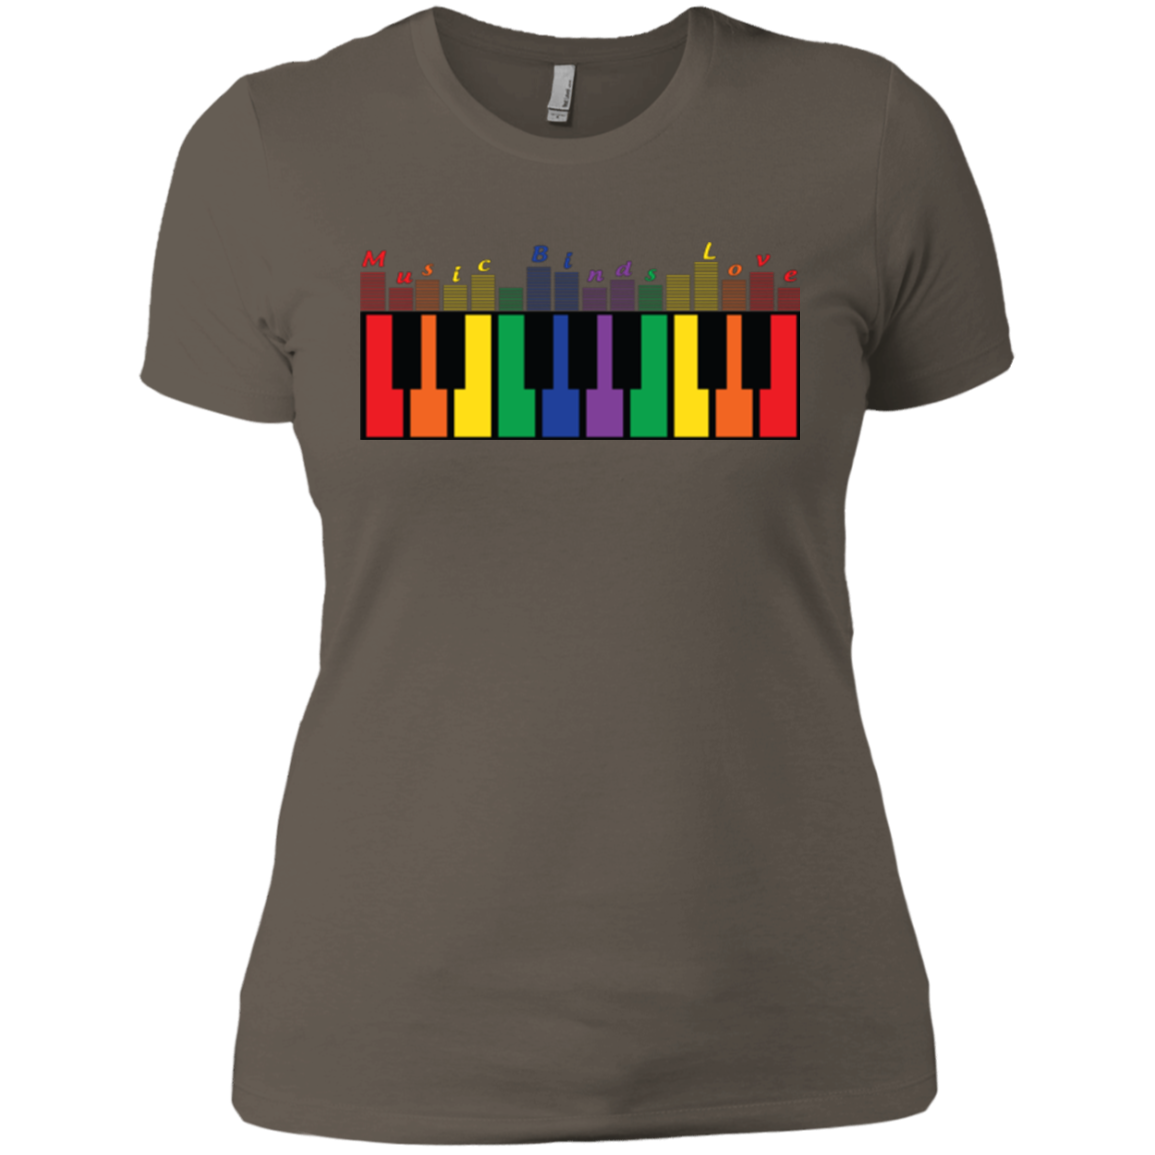 "Music Binds Love" Rainbow LGBT Pride half sleeves round neck tshirt for women